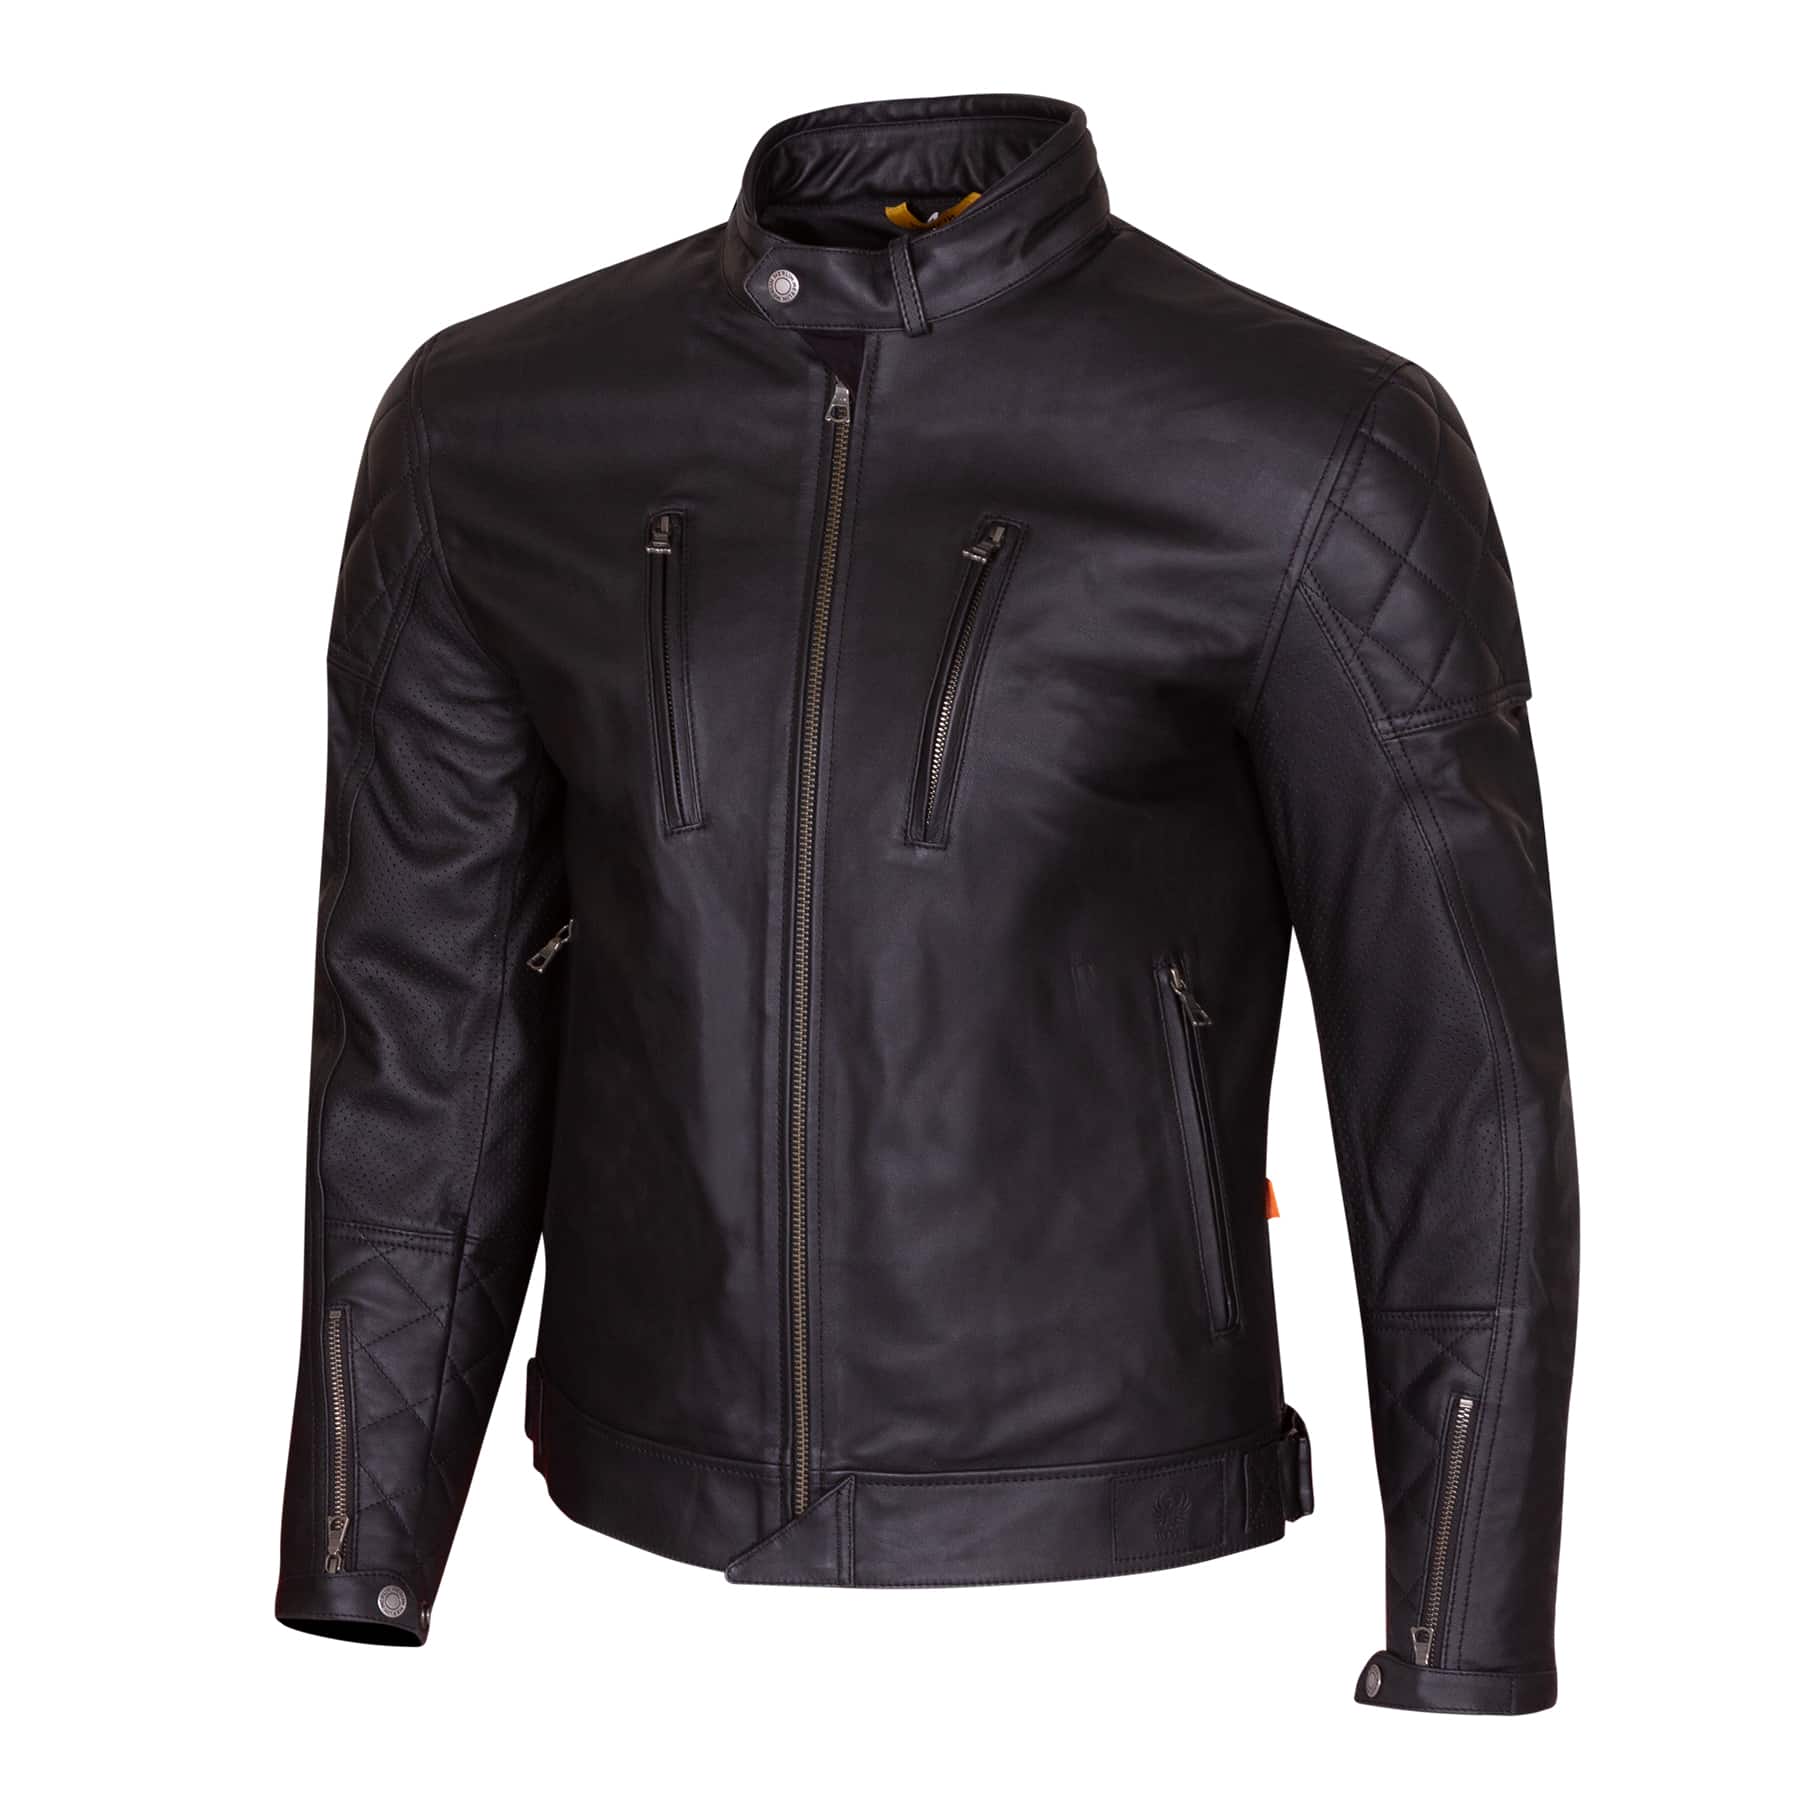 Merlin Wishaw Leather Motorcycle jacket in black